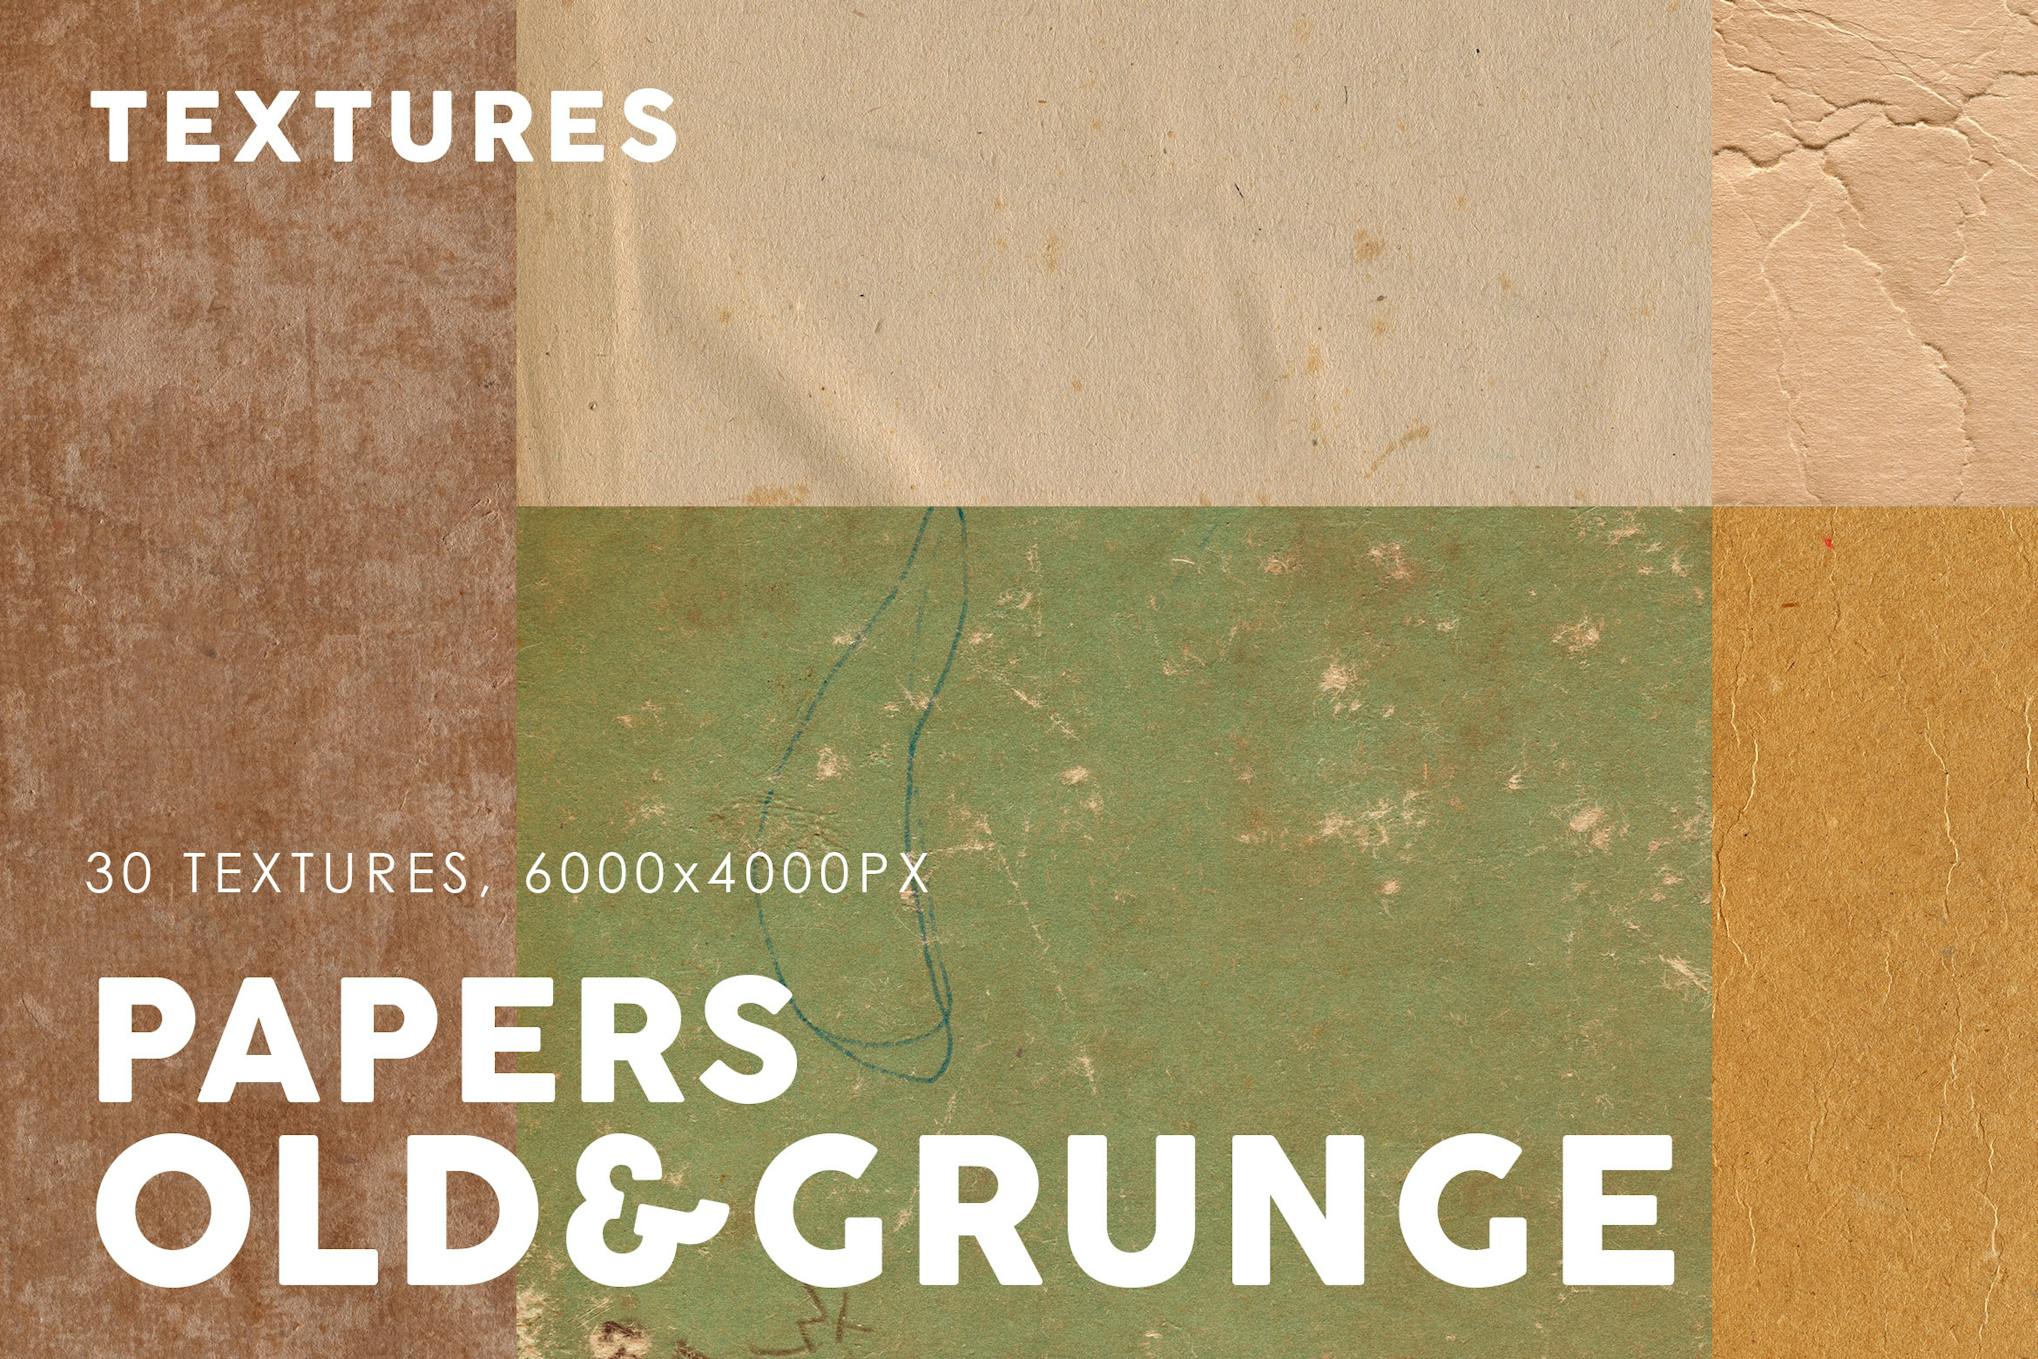 Old & Grunge Paper Textures